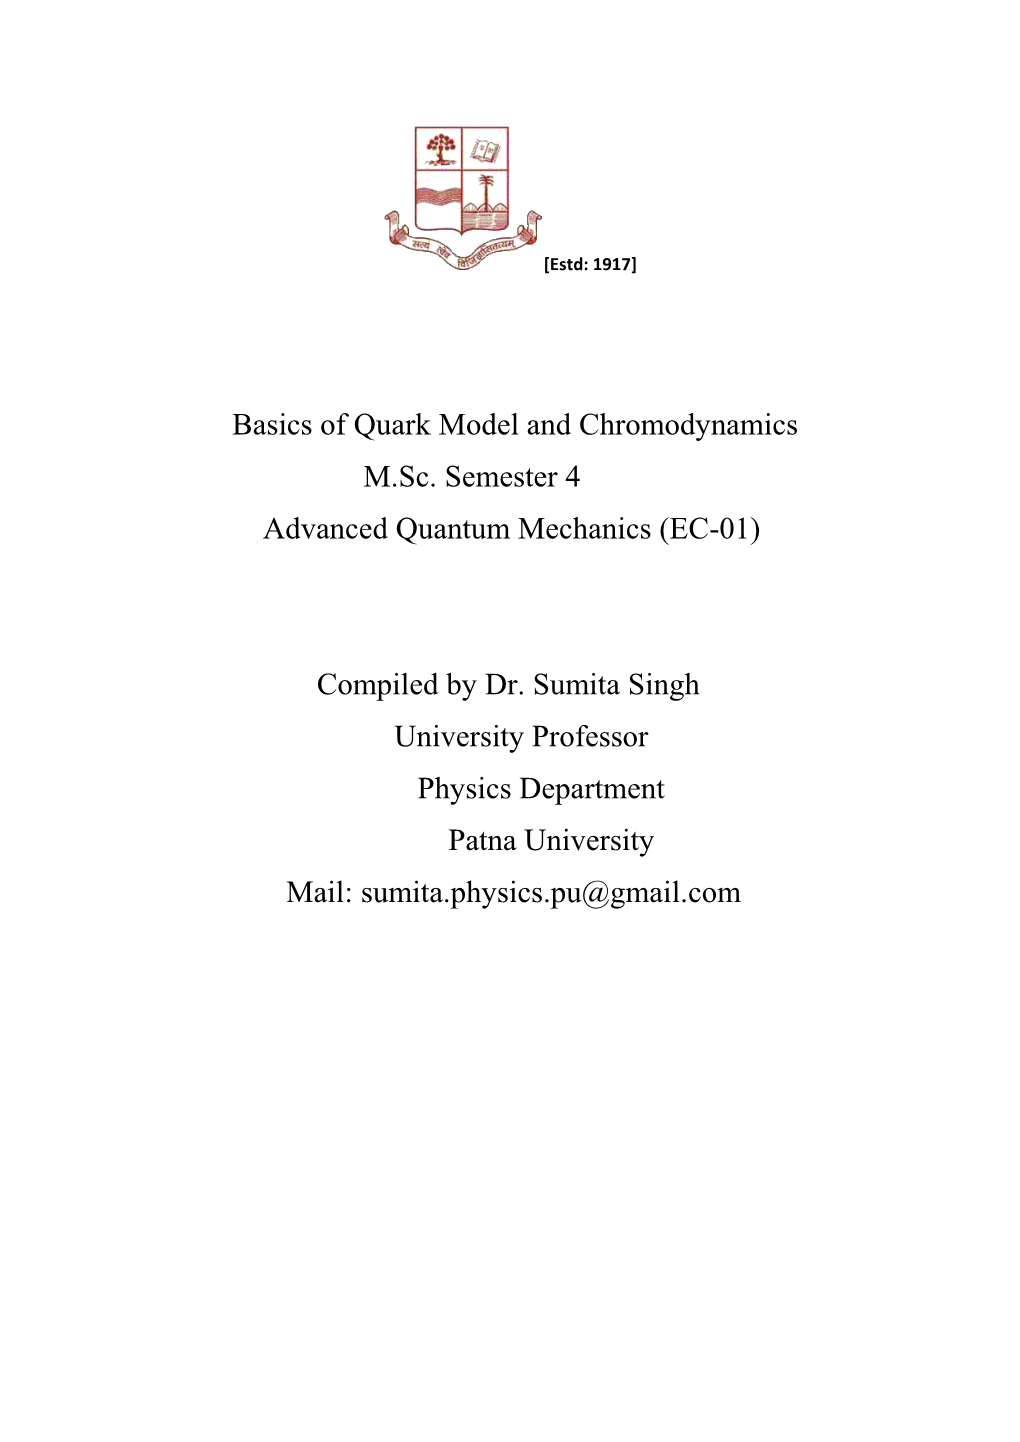 Basics of Quark Model and Chromodynamics M.Sc